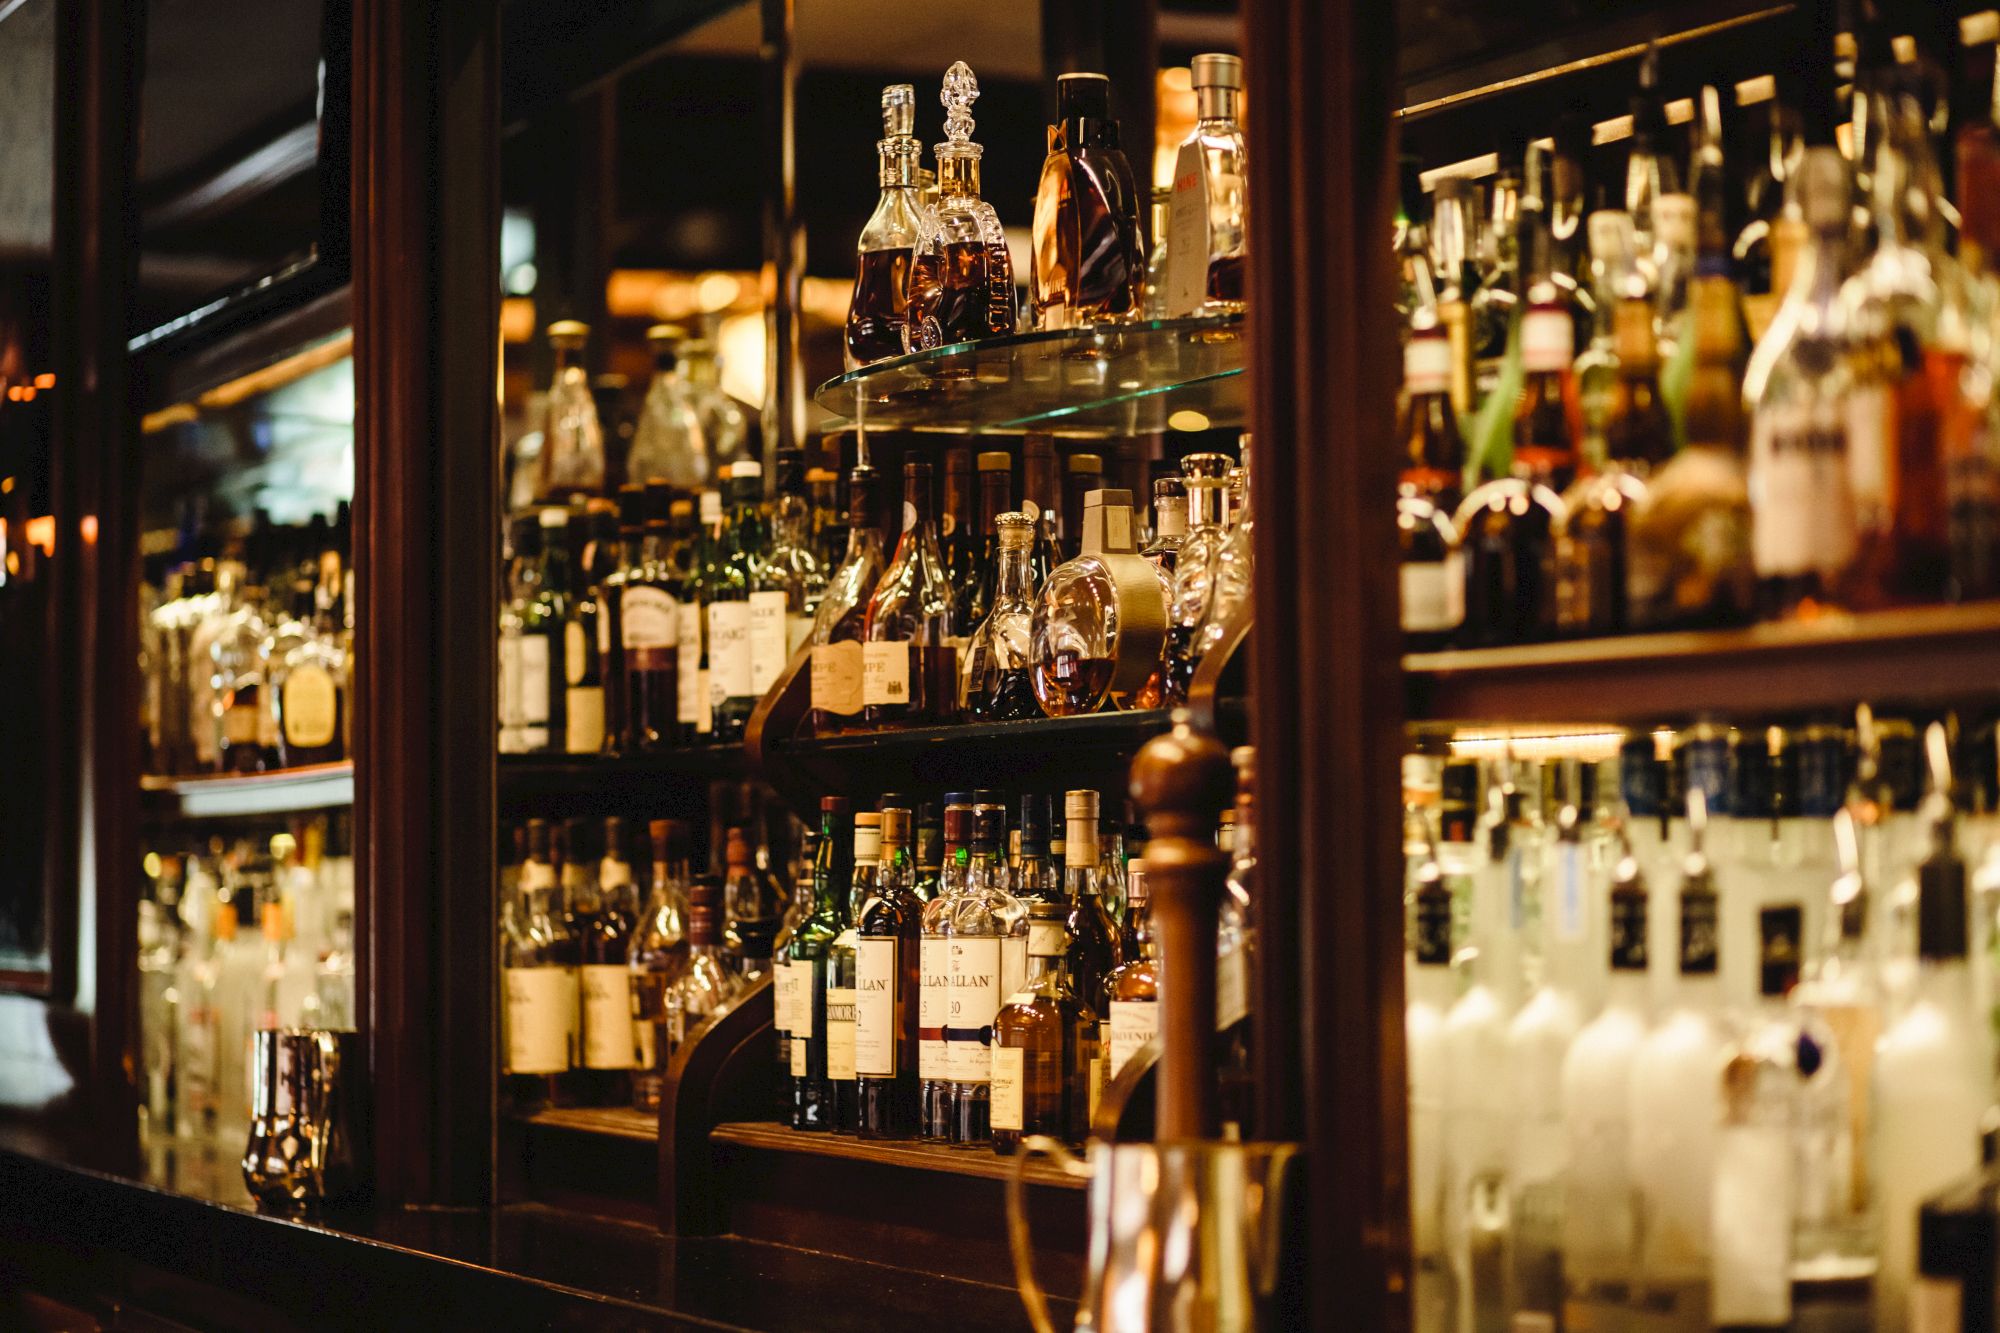 An array of various liquor bottles on illuminated shelves in a bar.